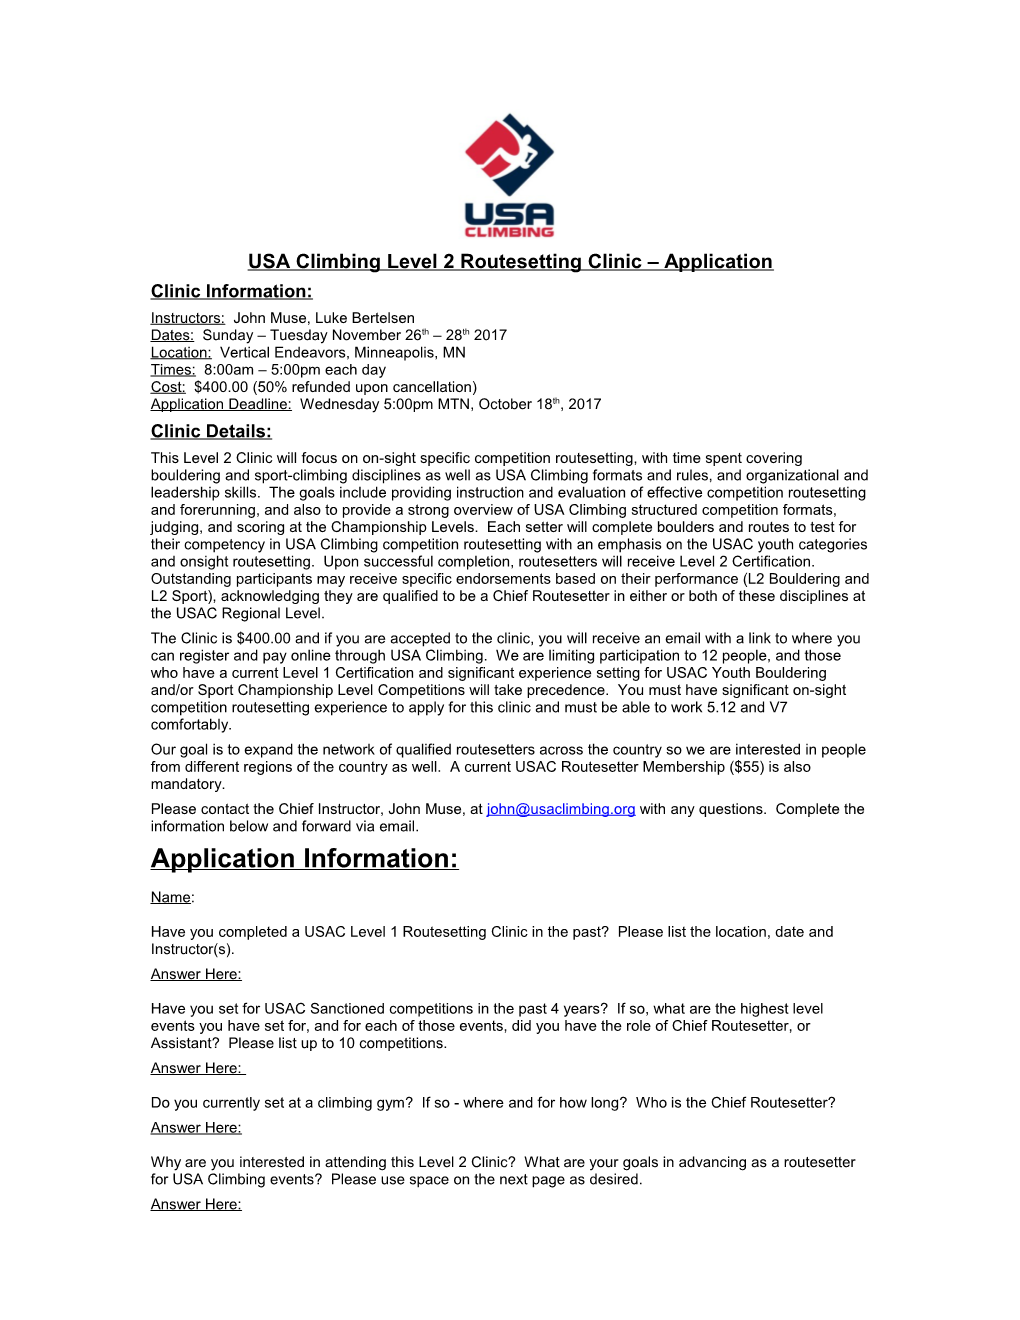 USA Climbing Level 2 Routesetting Clinic Application